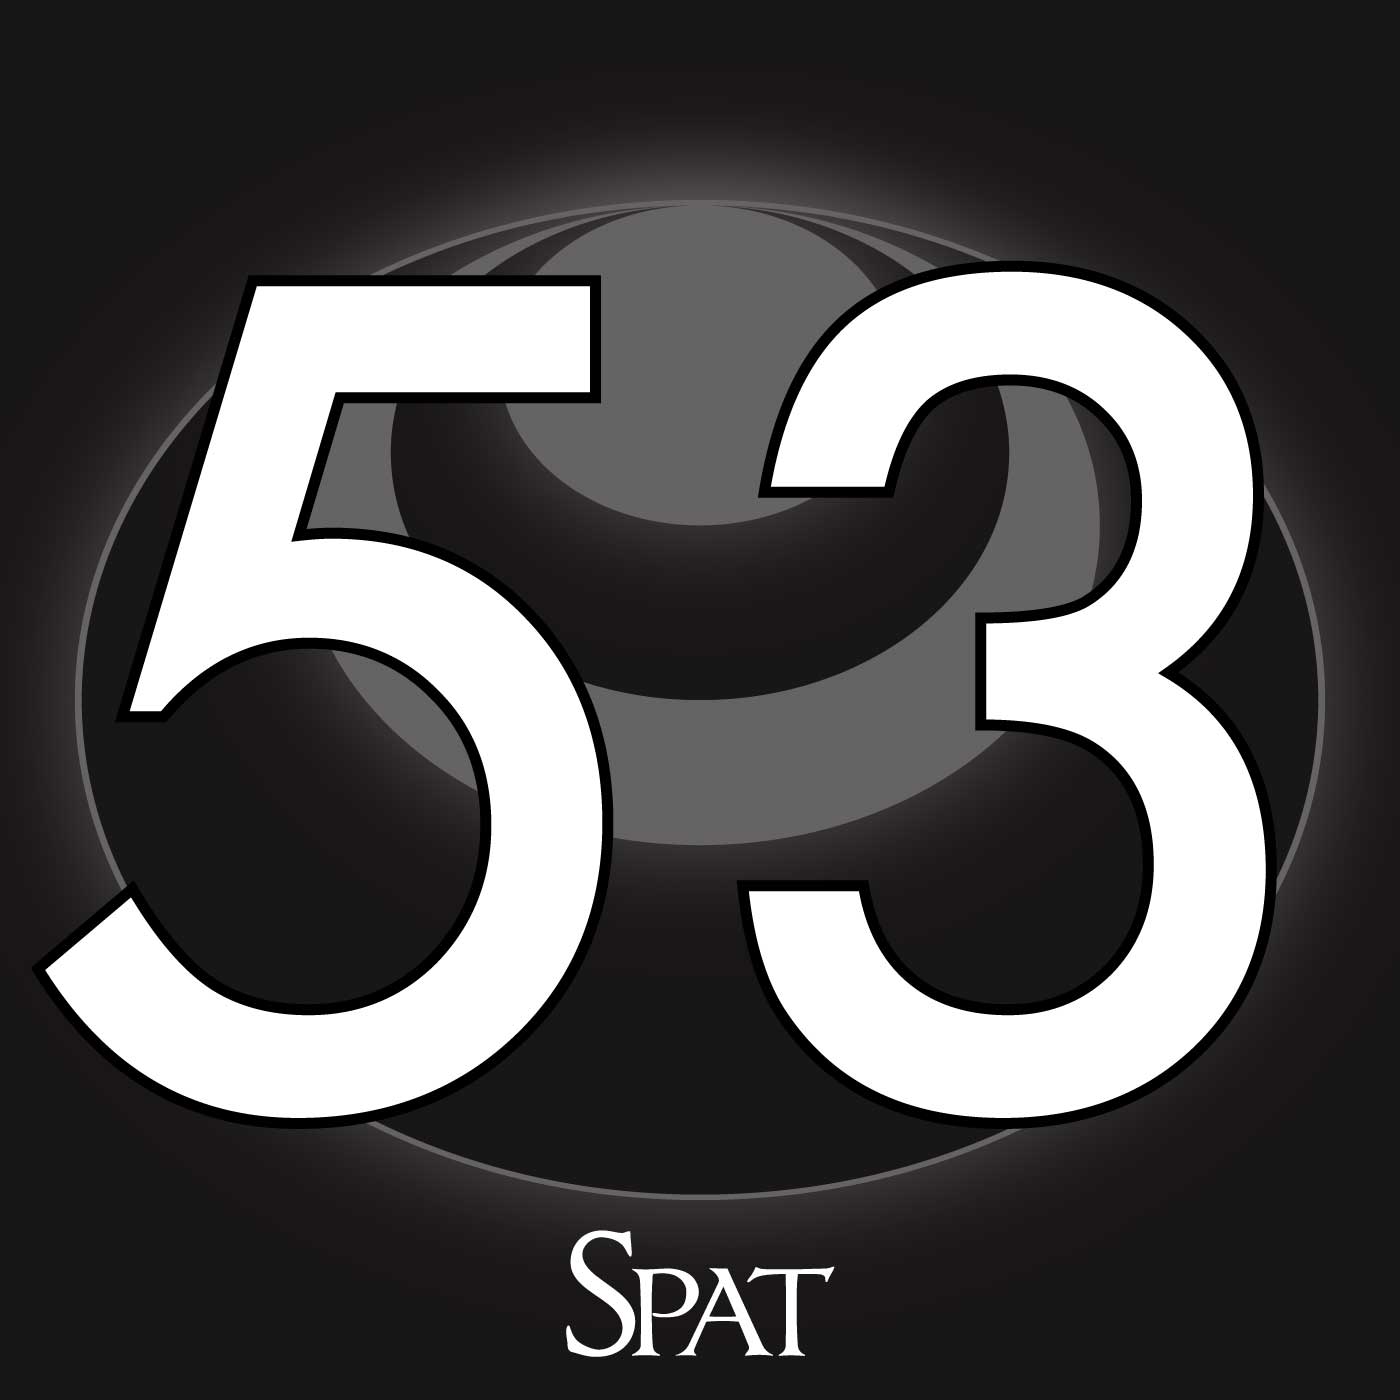 53 – Spat